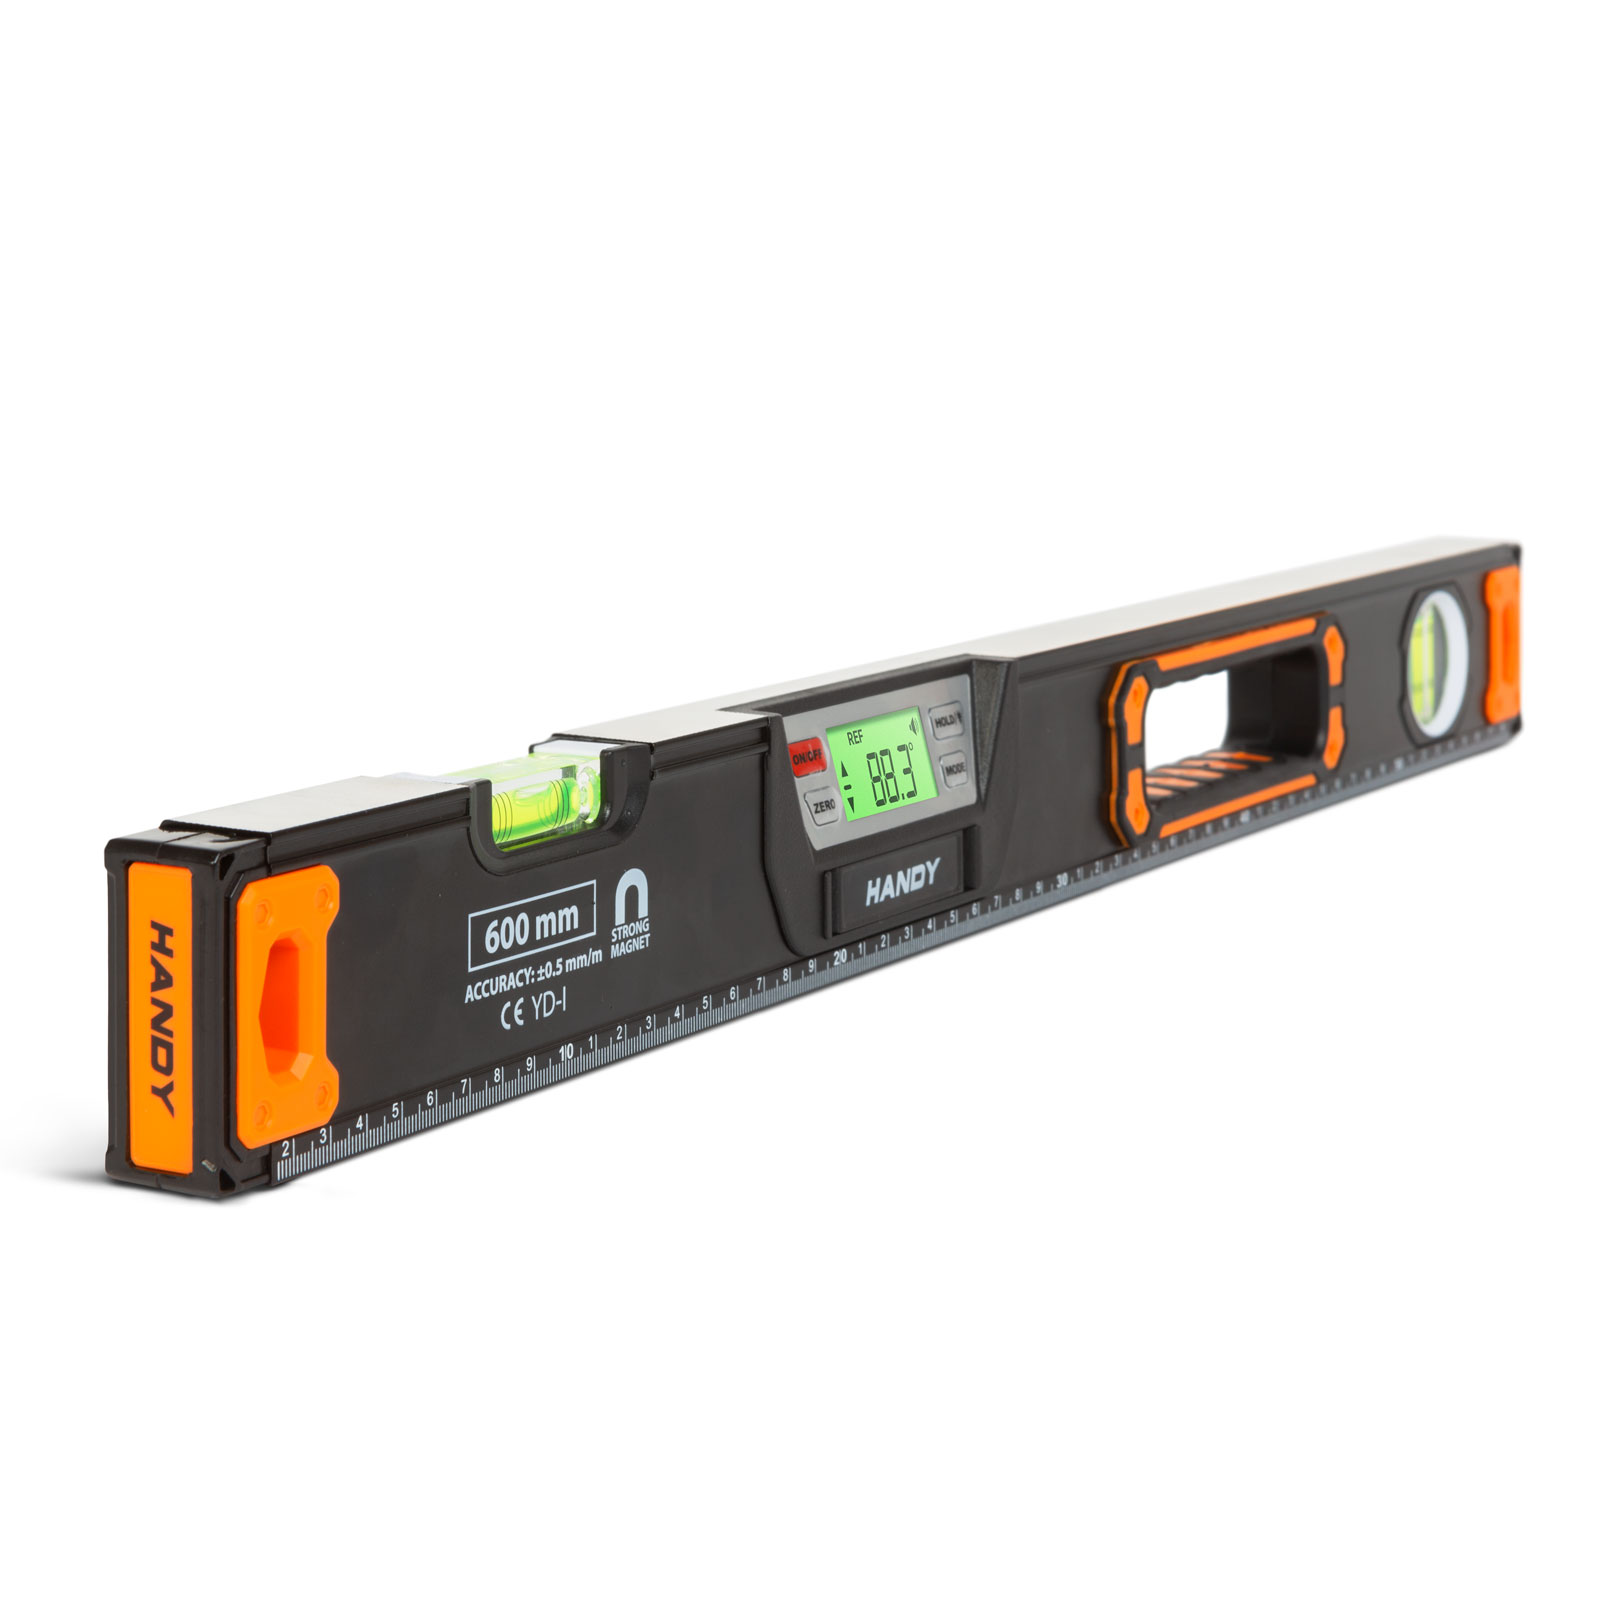 Nivela Boloboc Magnetica Digitala cu Afisaj LCD, Avertizare Sonora si Rigla, Lungime 60 cm, Masurare Unghi 0-360 Grade